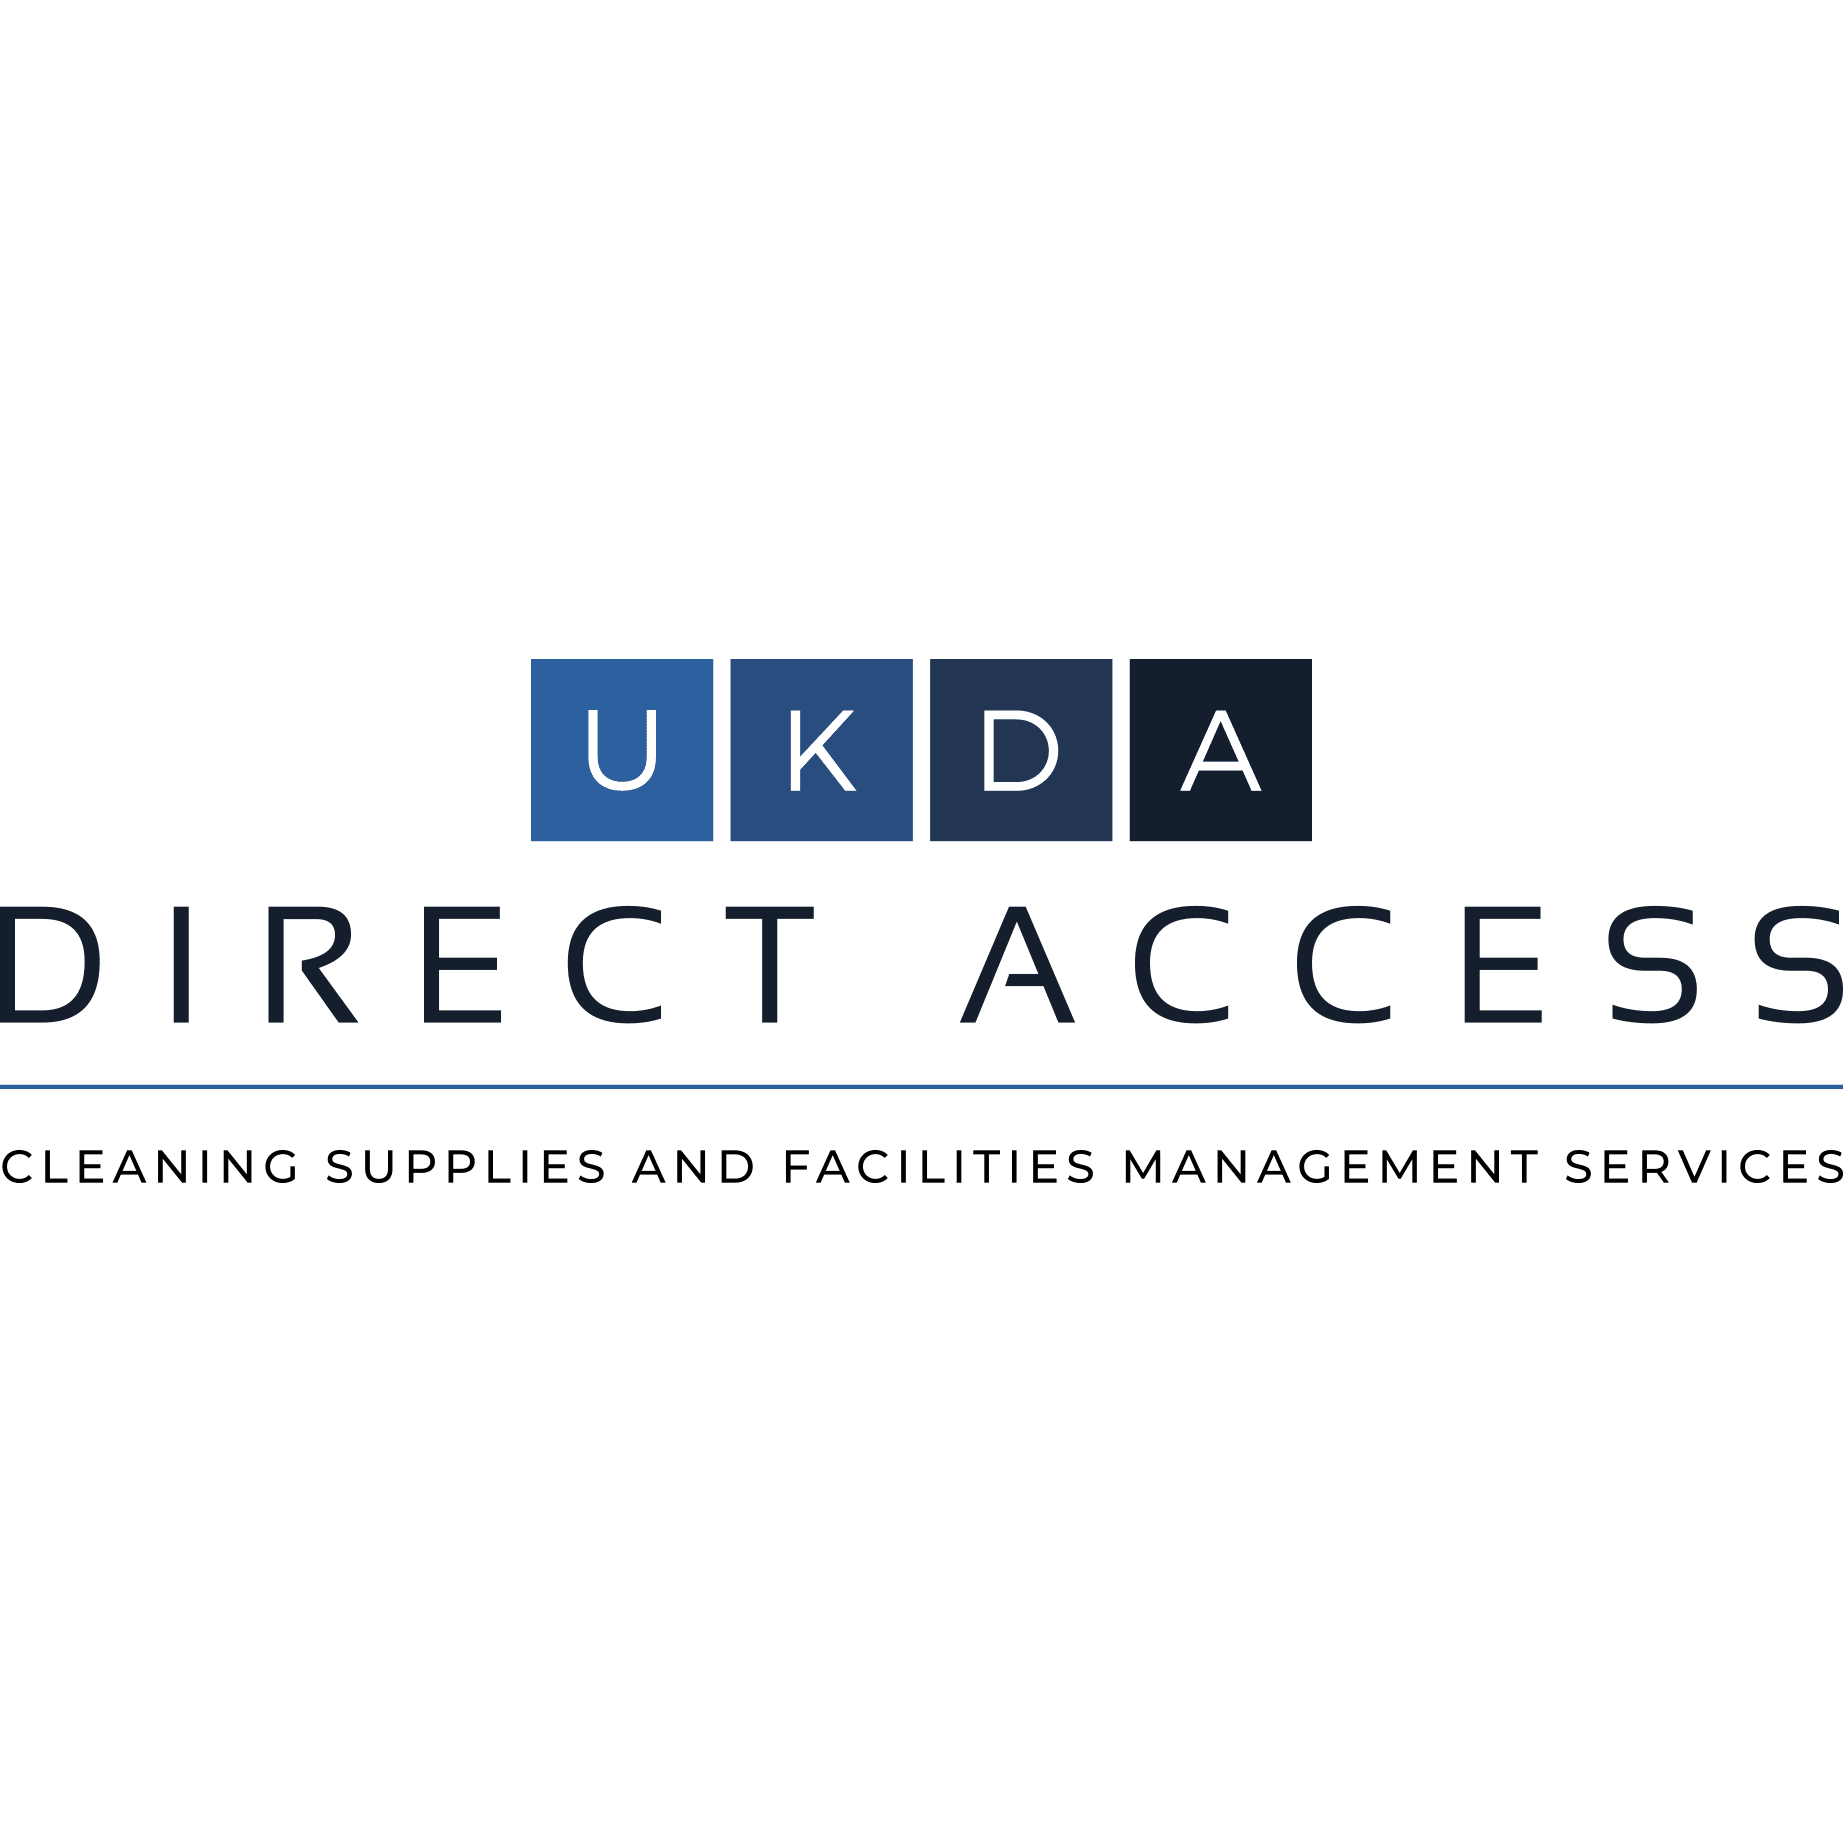 UK Direct Access Ltd - Dudley, West Midlands DY2 8UB - 08000 549903 | ShowMeLocal.com